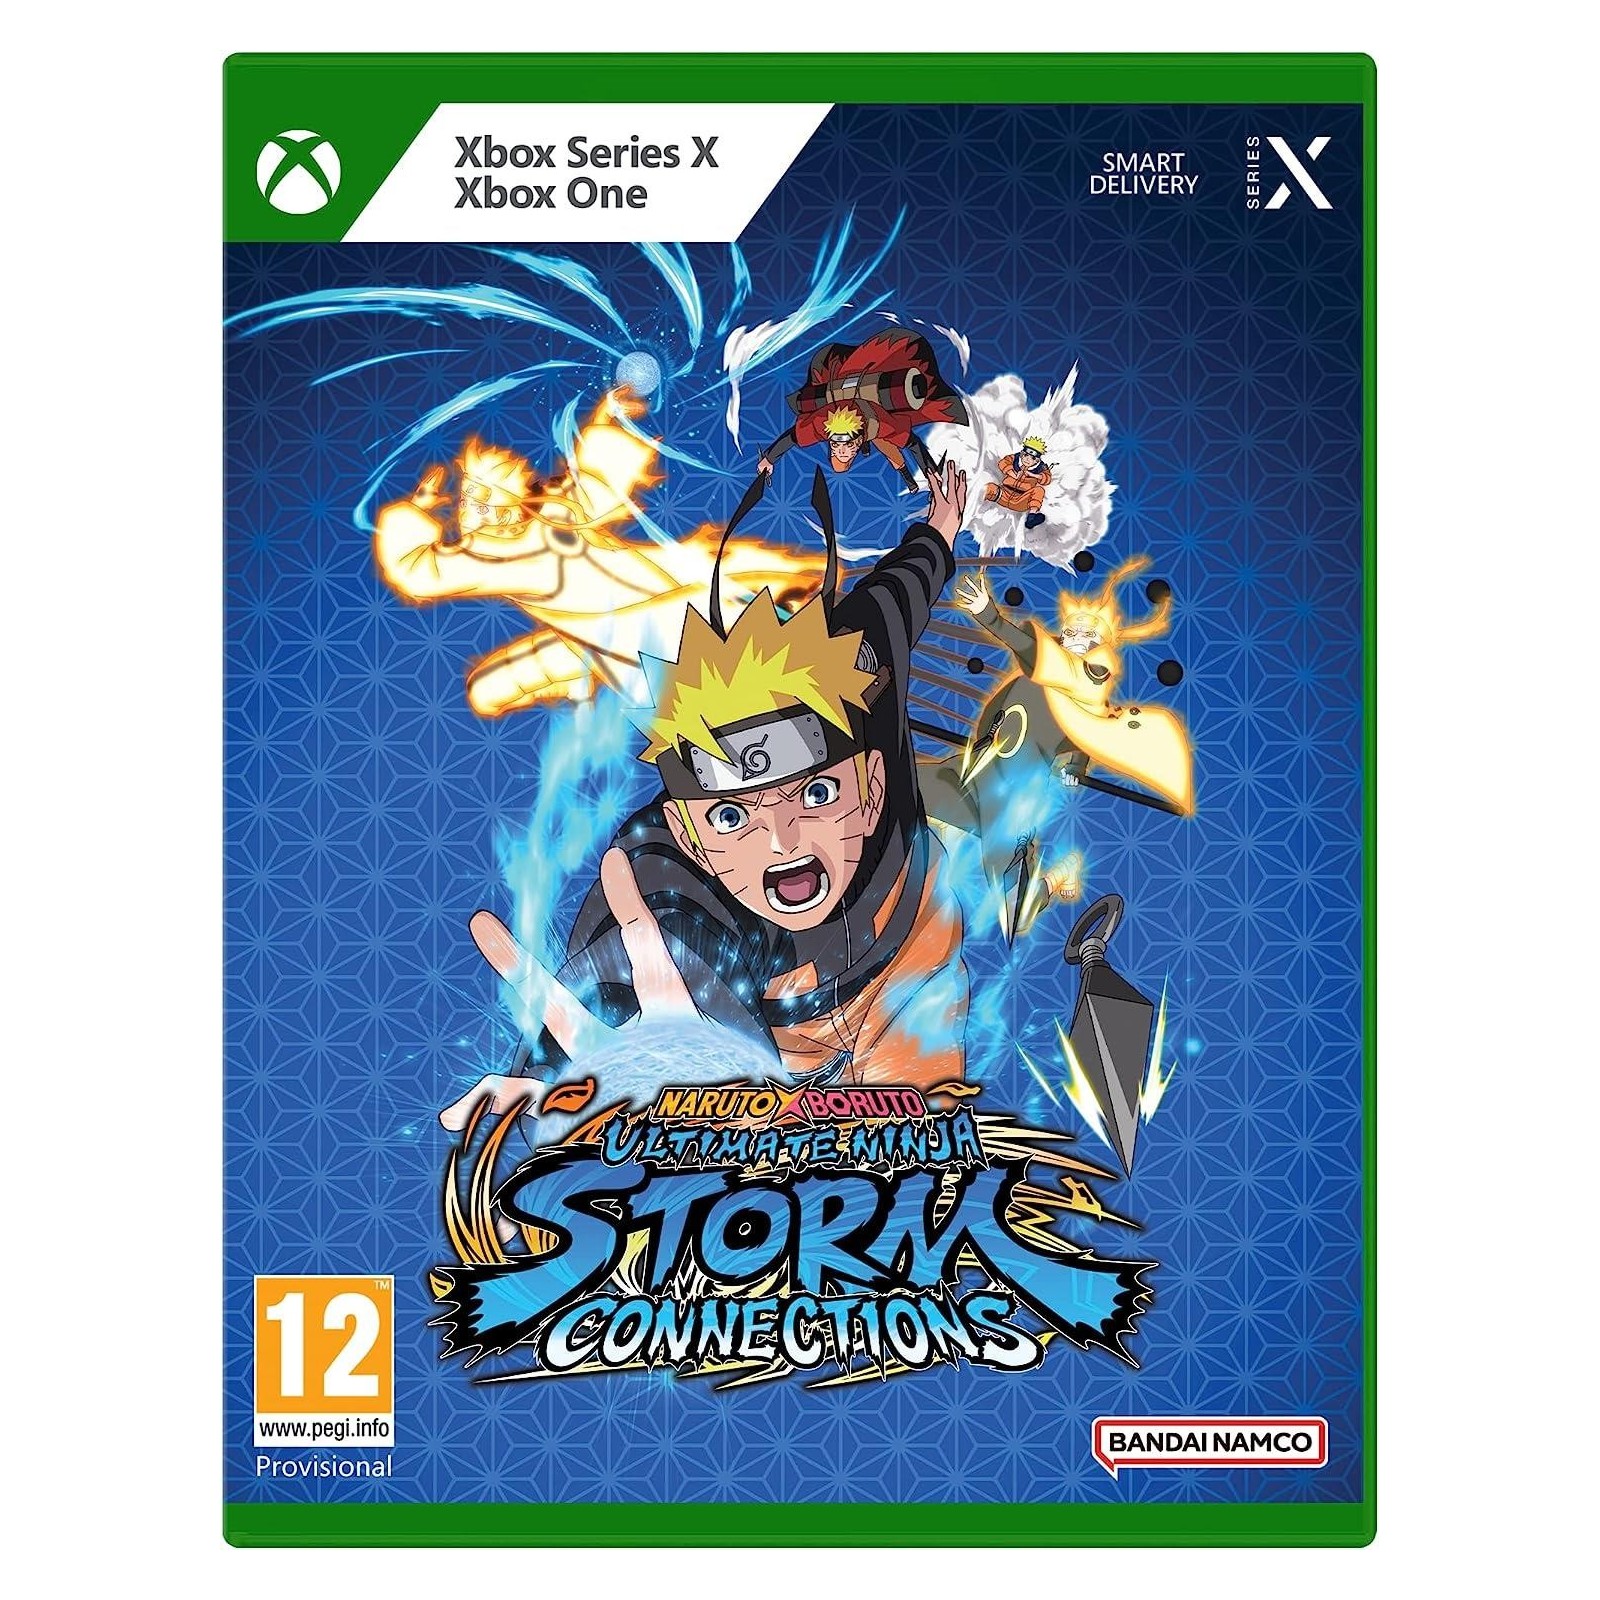 Naruto X Boruto Ultimate Ninja Storm Connections  Xboxseries